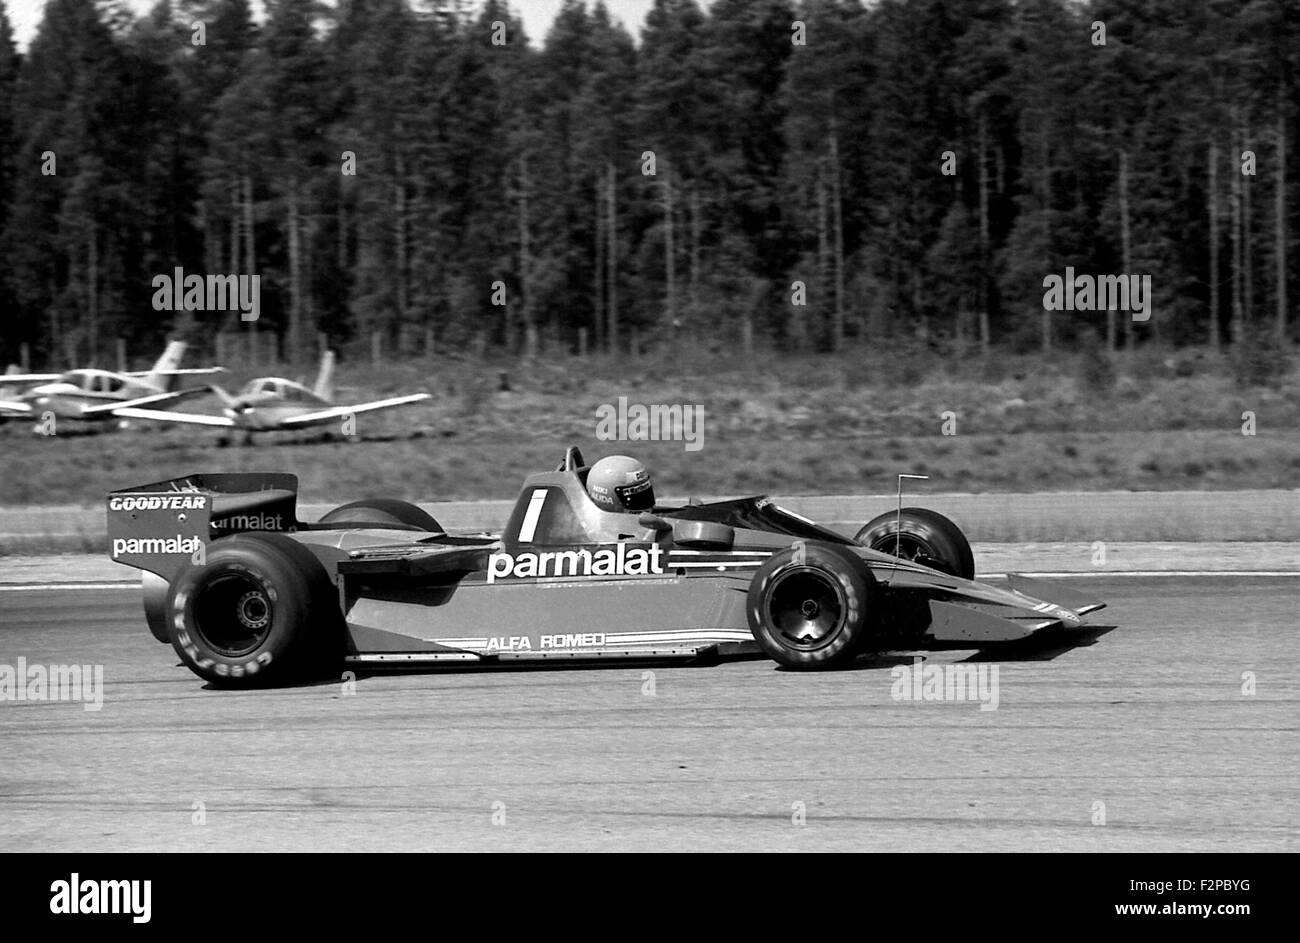 Niki Lauda in una Alfa Romeo Brabham fancar presso il GP svedese a  Scandinavian Raceway 1978 Foto stock - Alamy